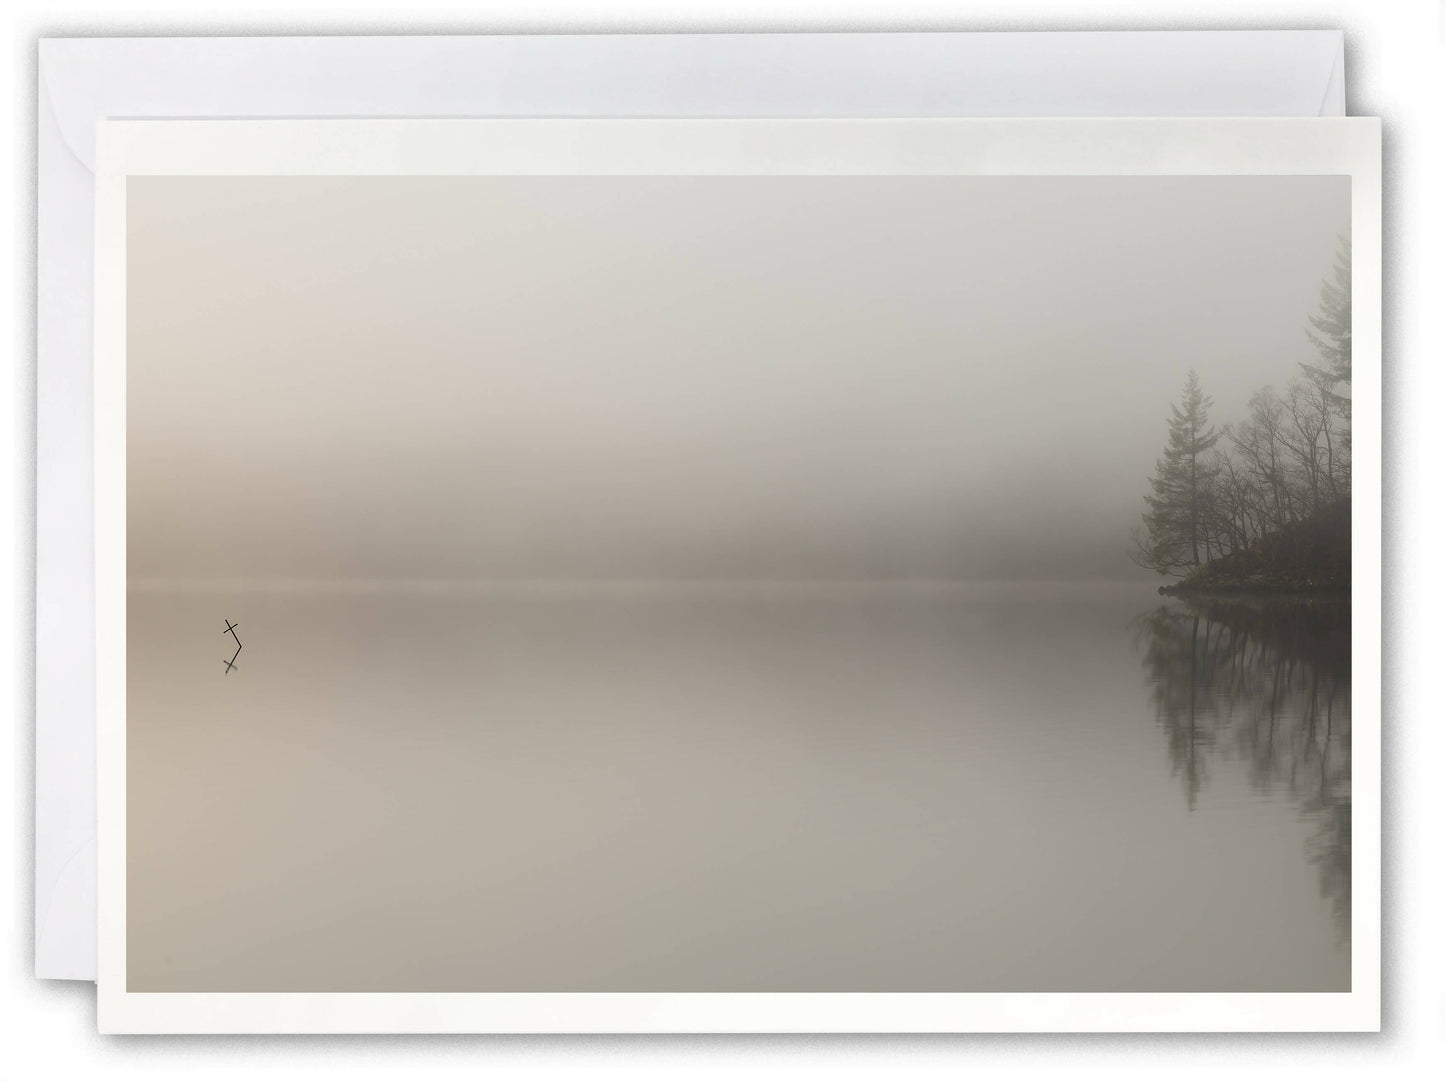 Misty Loch Ard, The Trossachs - Scotland Greeting Card - Blank Inside